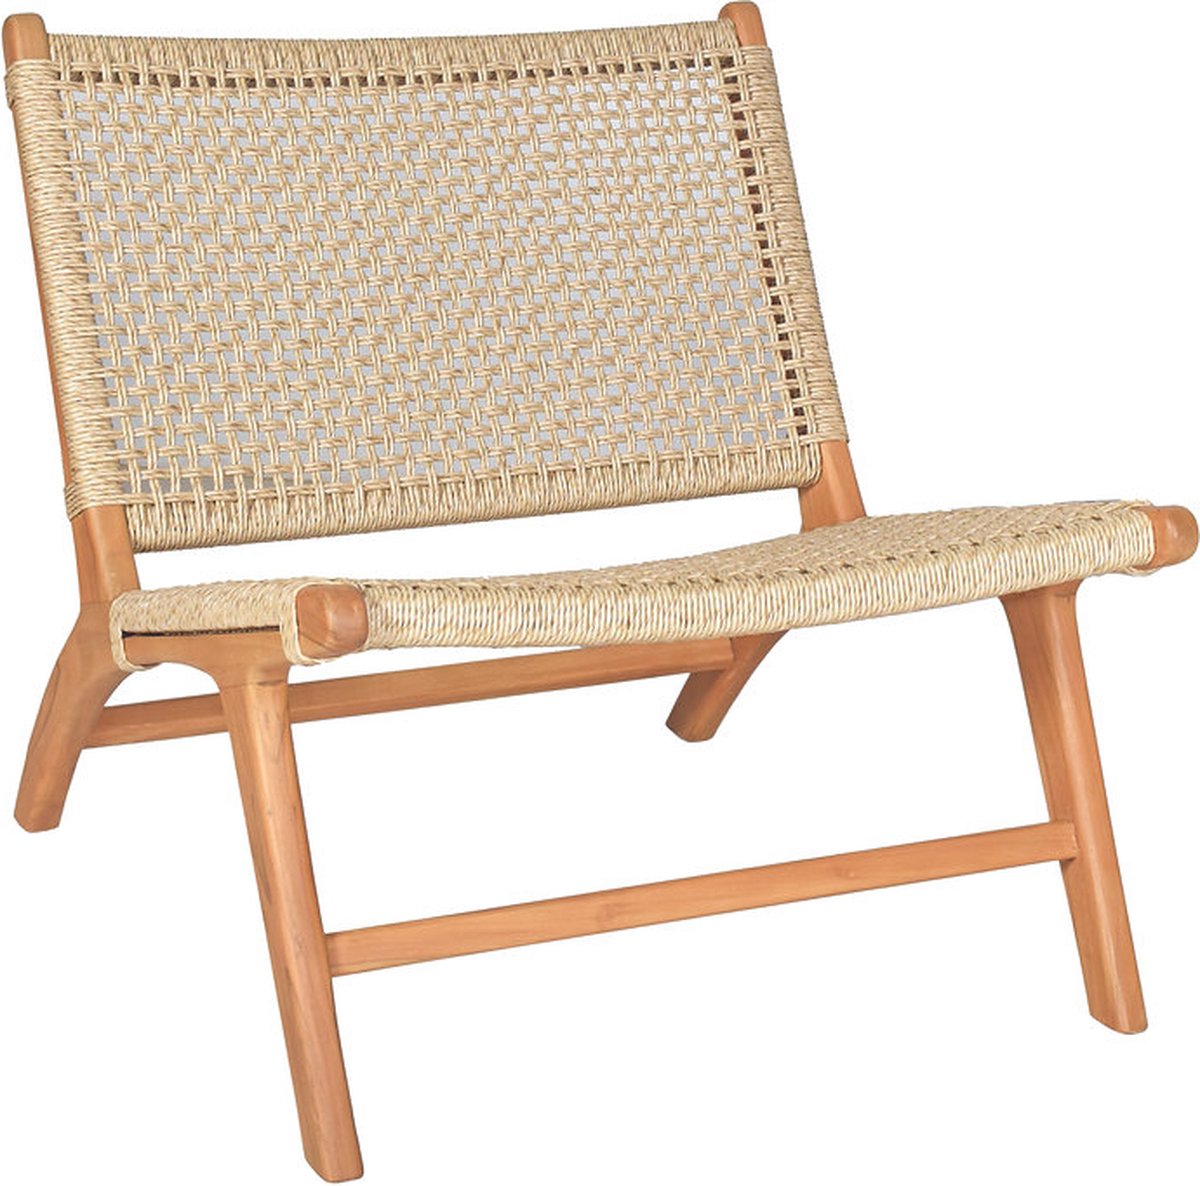 DKS lounge stoel Taburete terrasstoel teak & viro wicker 65*67* 69 cm